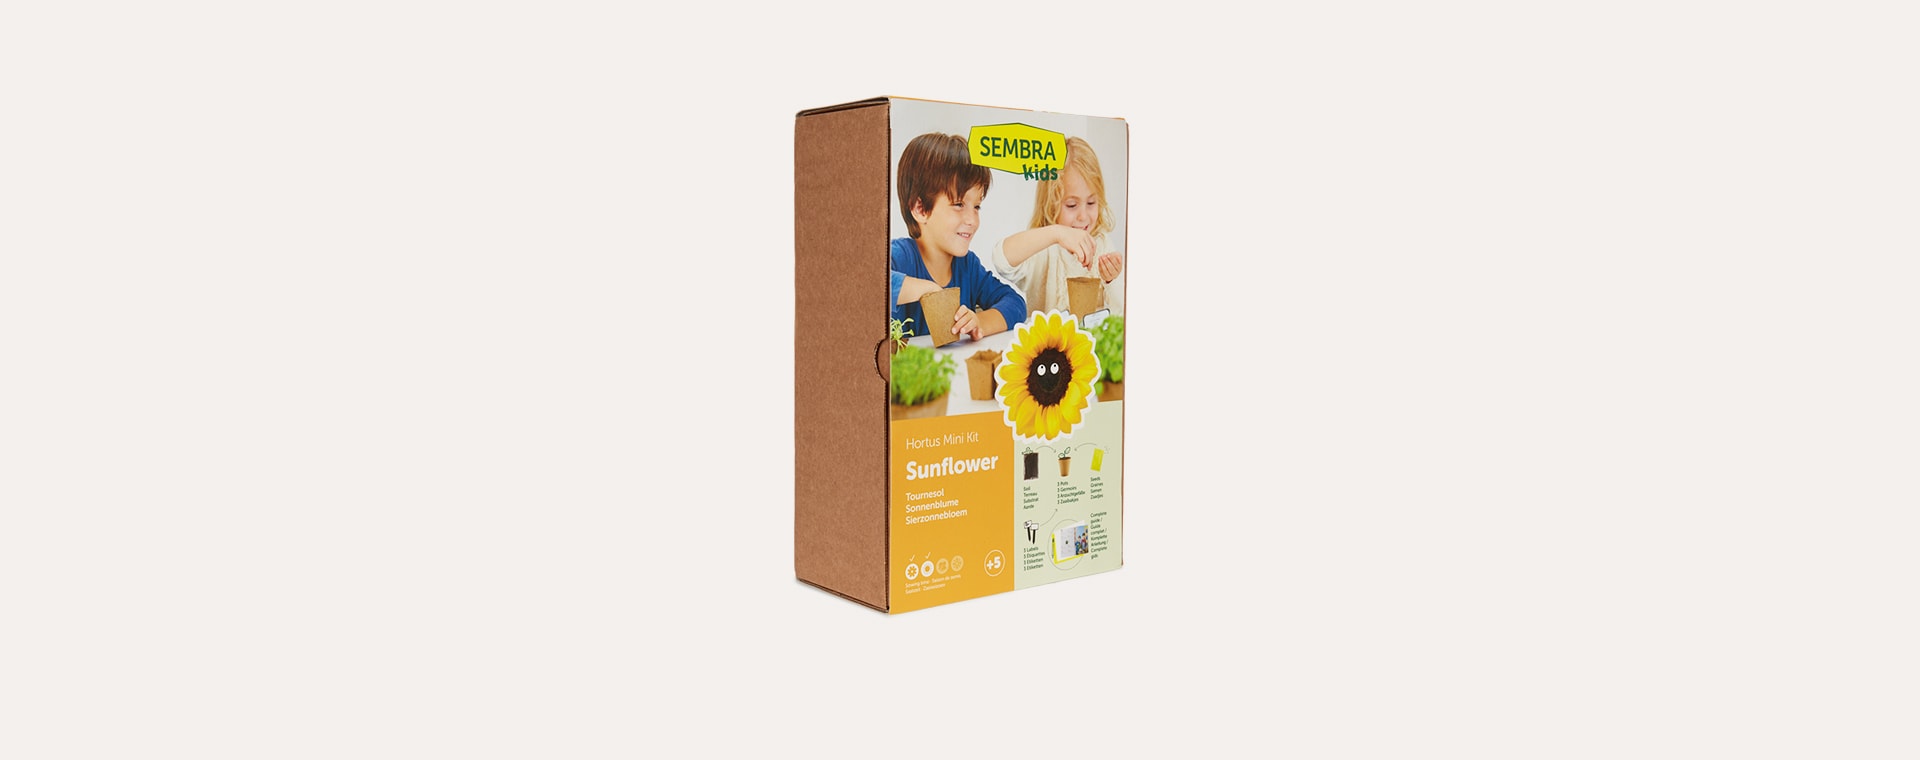 Sunflower Sembra Kids Standard Kit